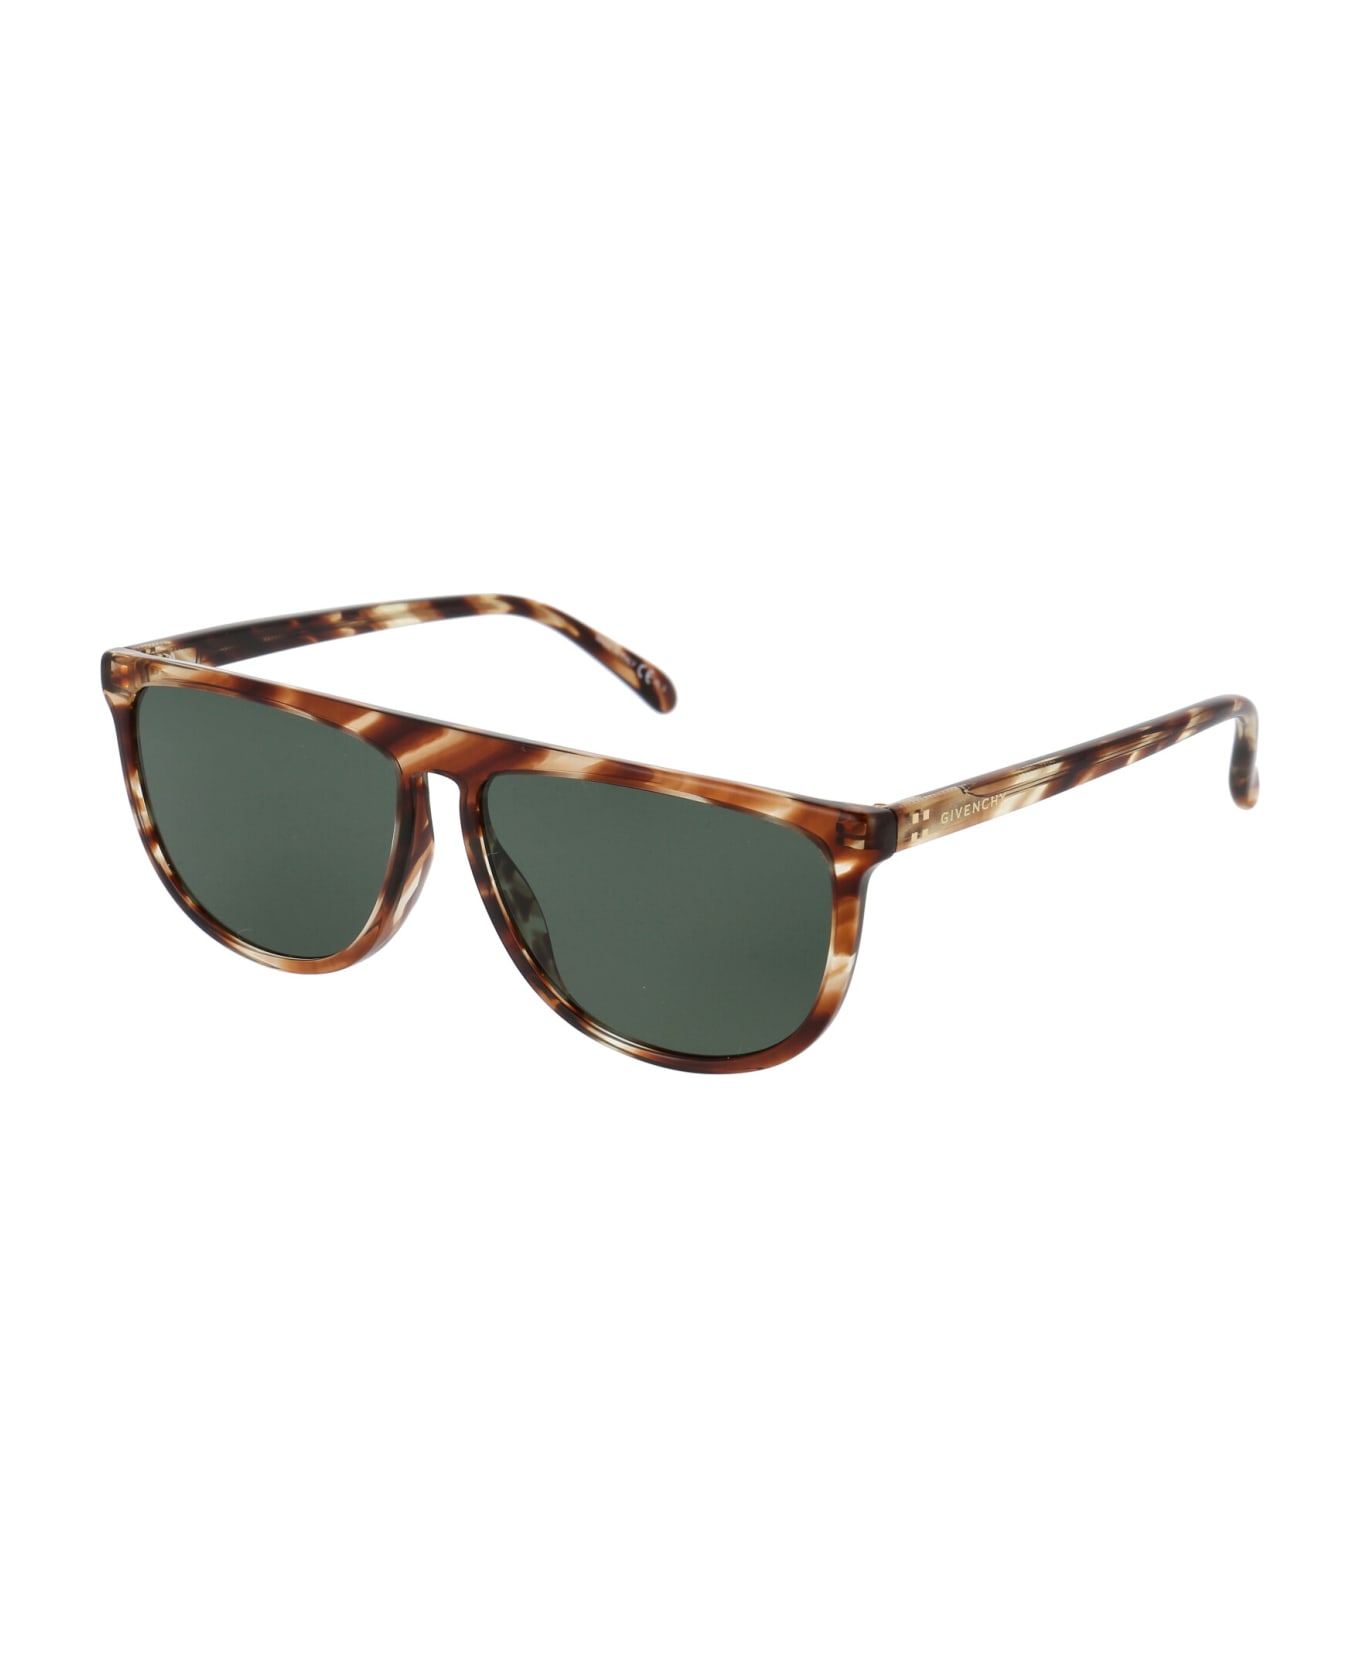 Givenchy Eyewear Gv 7145/s Sunglasses - EX4QT BROWN HORN